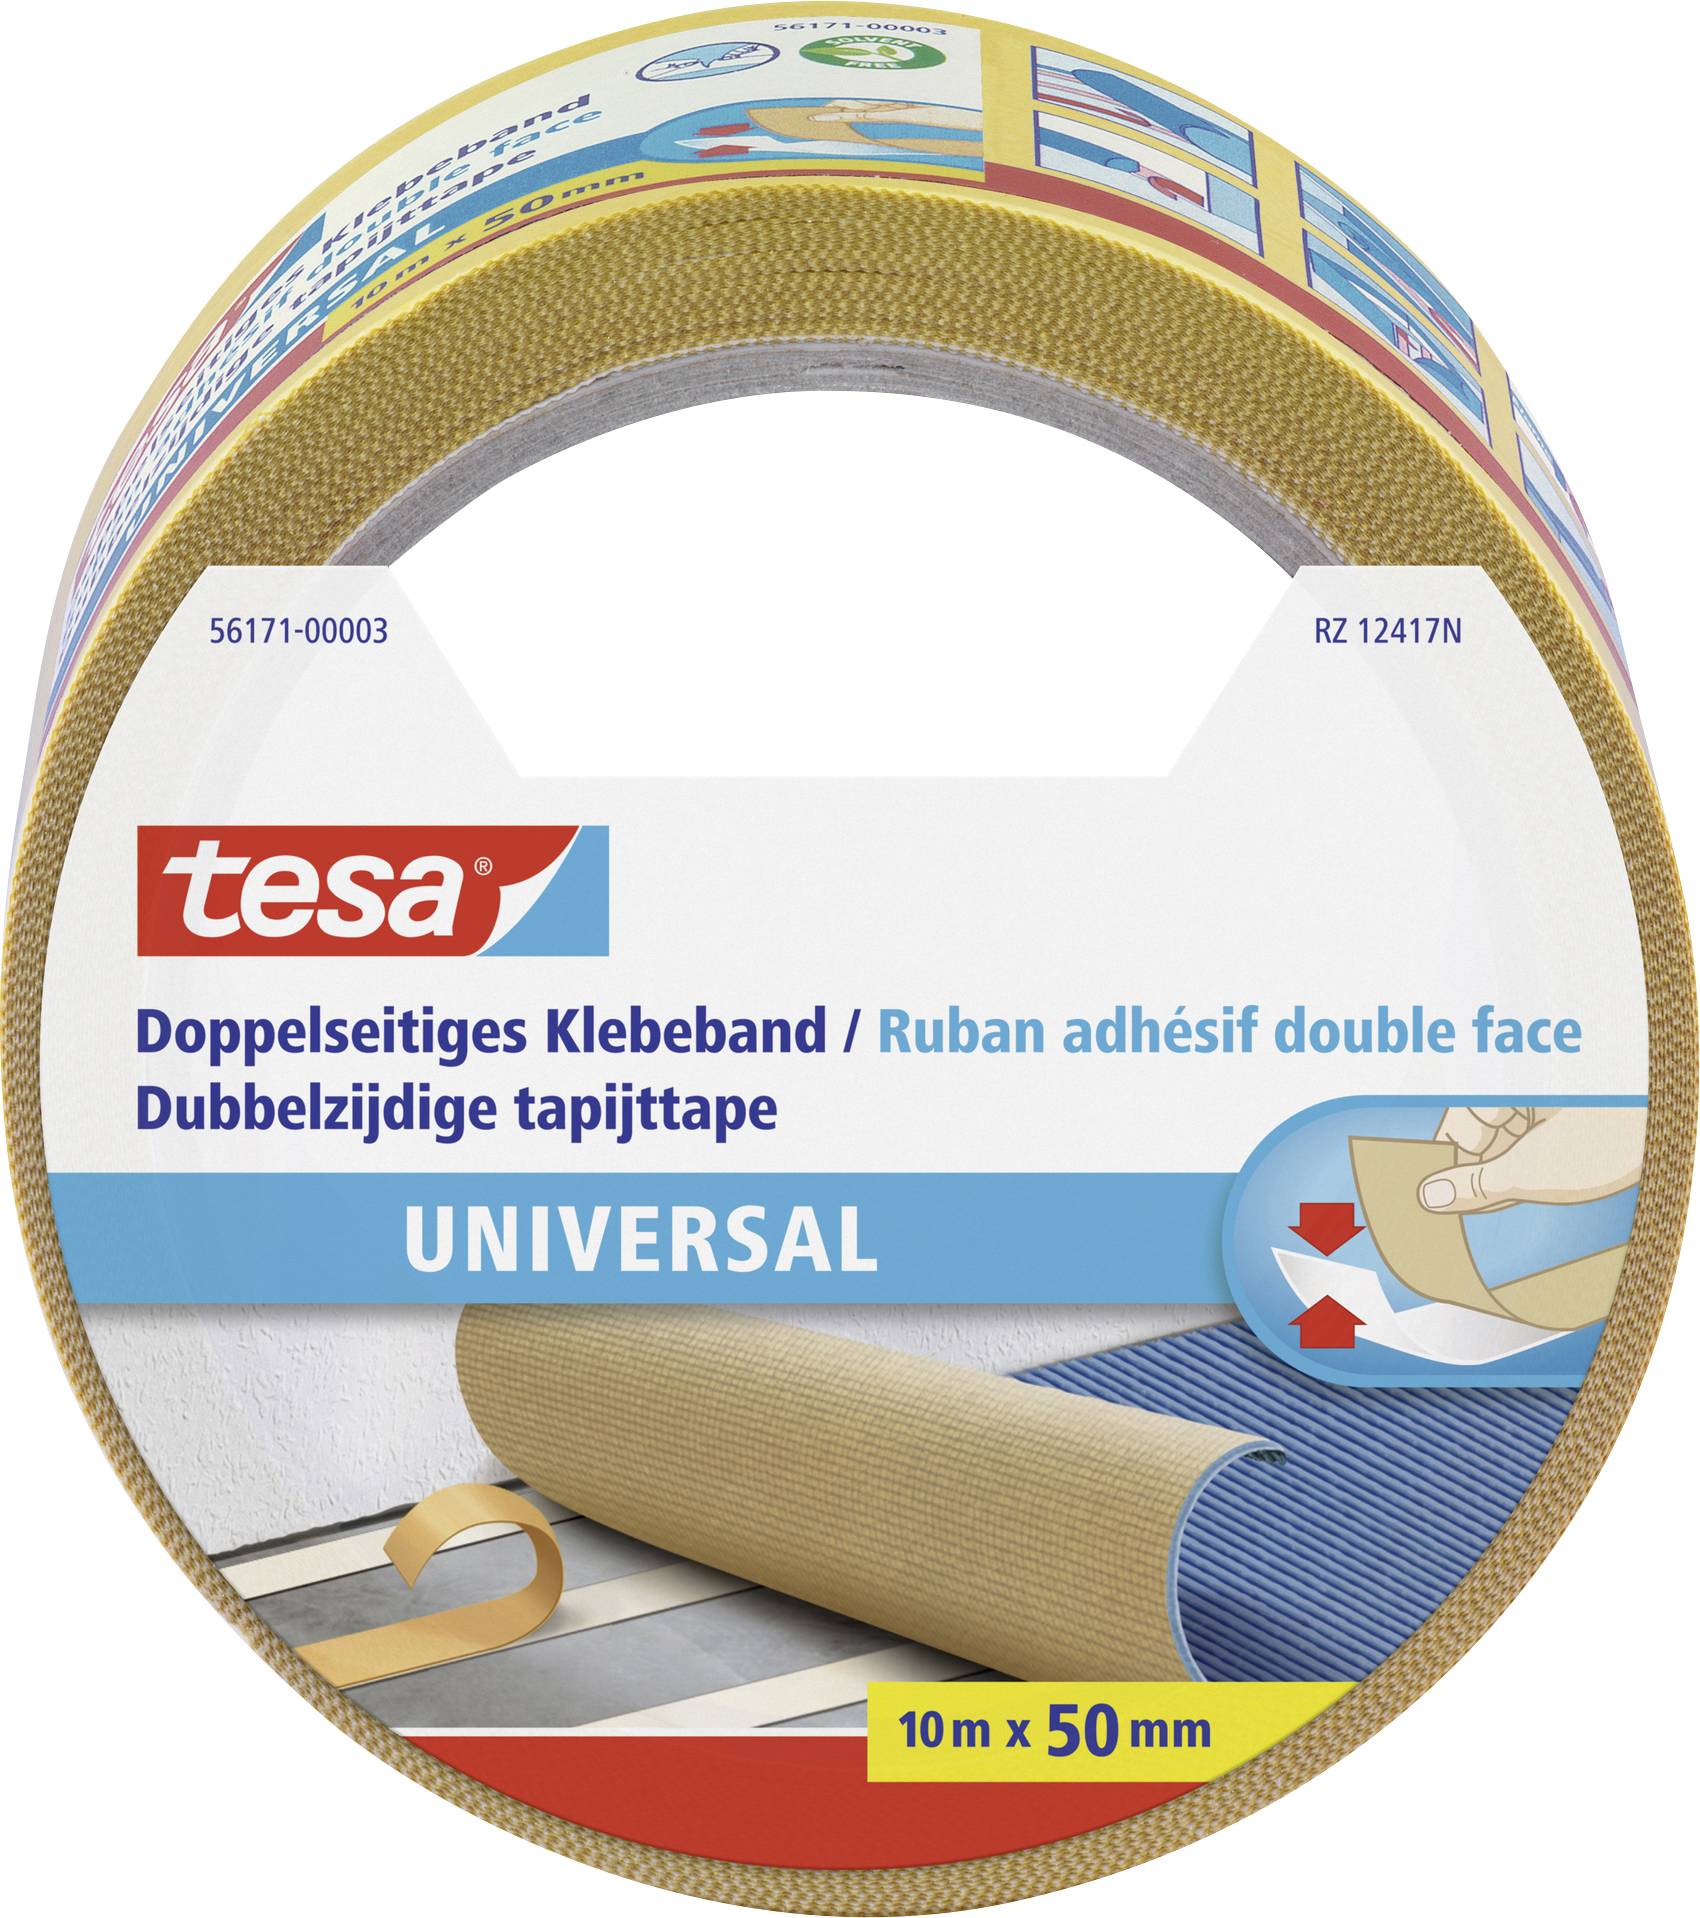 TESA Doppelseitiges Klebeband universal 10m 50mm